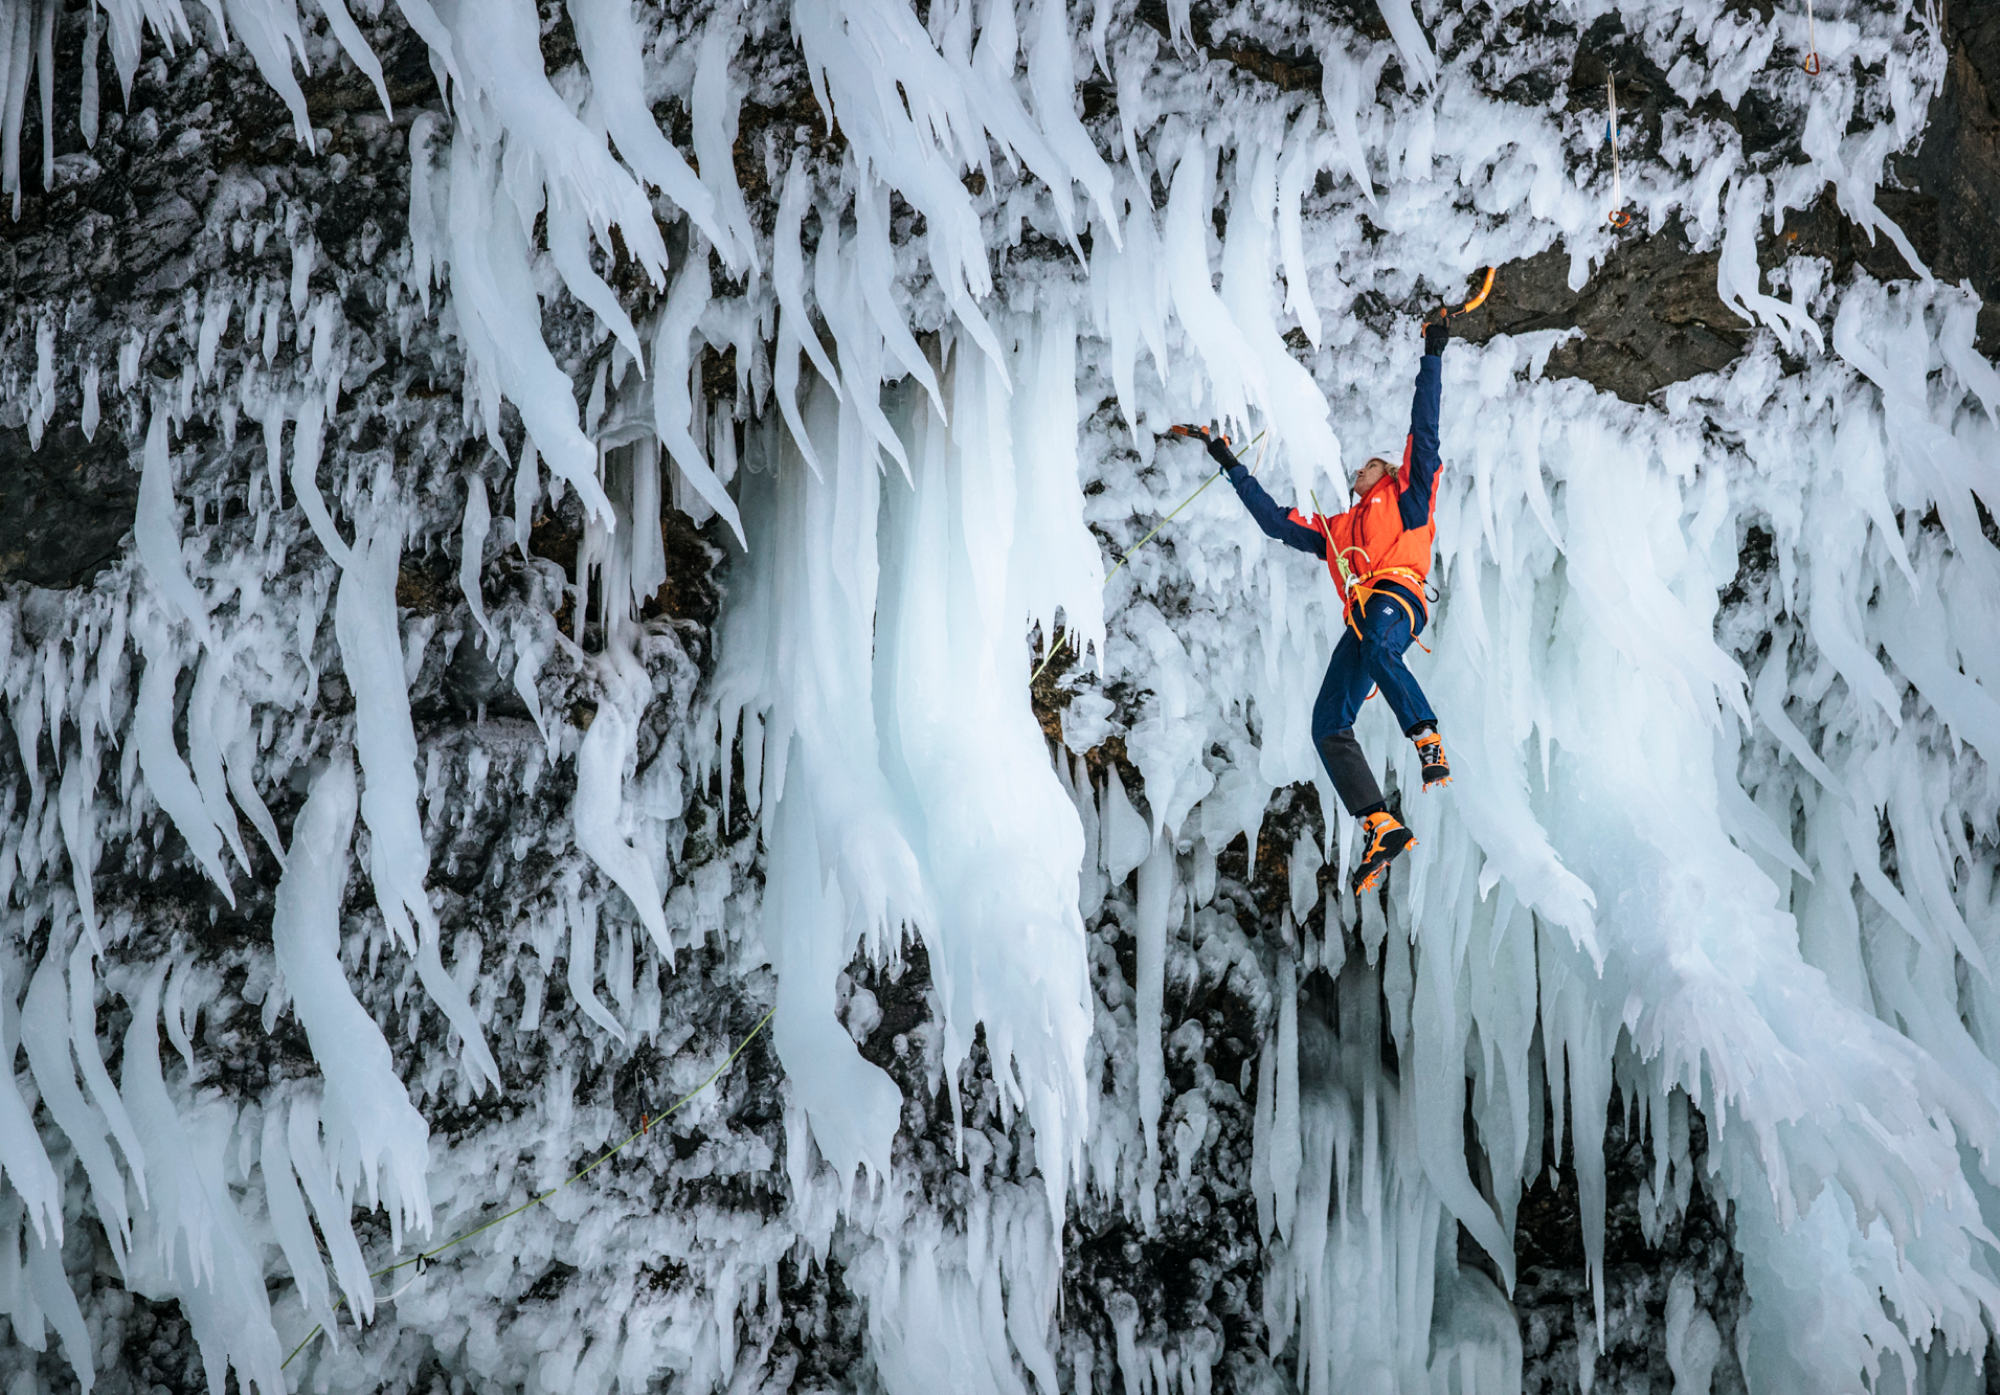 Tim Emmett ice climbing at Helmcken Falls in British Columbia, Canada.